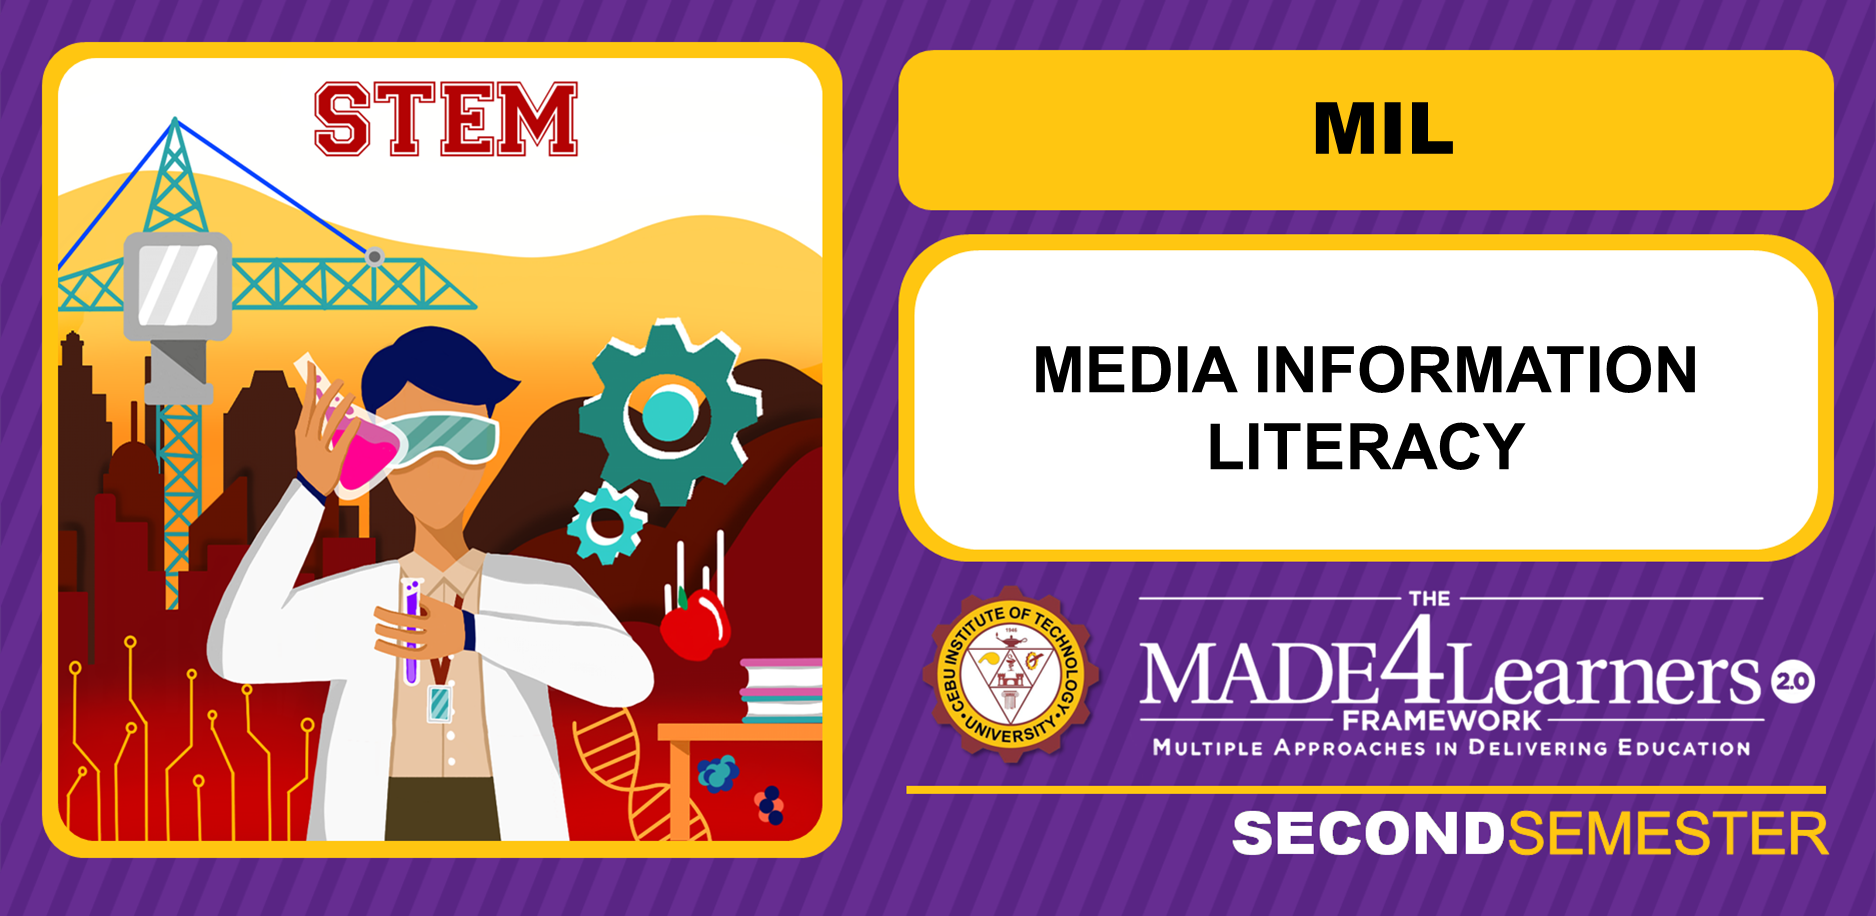 MIL: Media Information Literacy (Español)